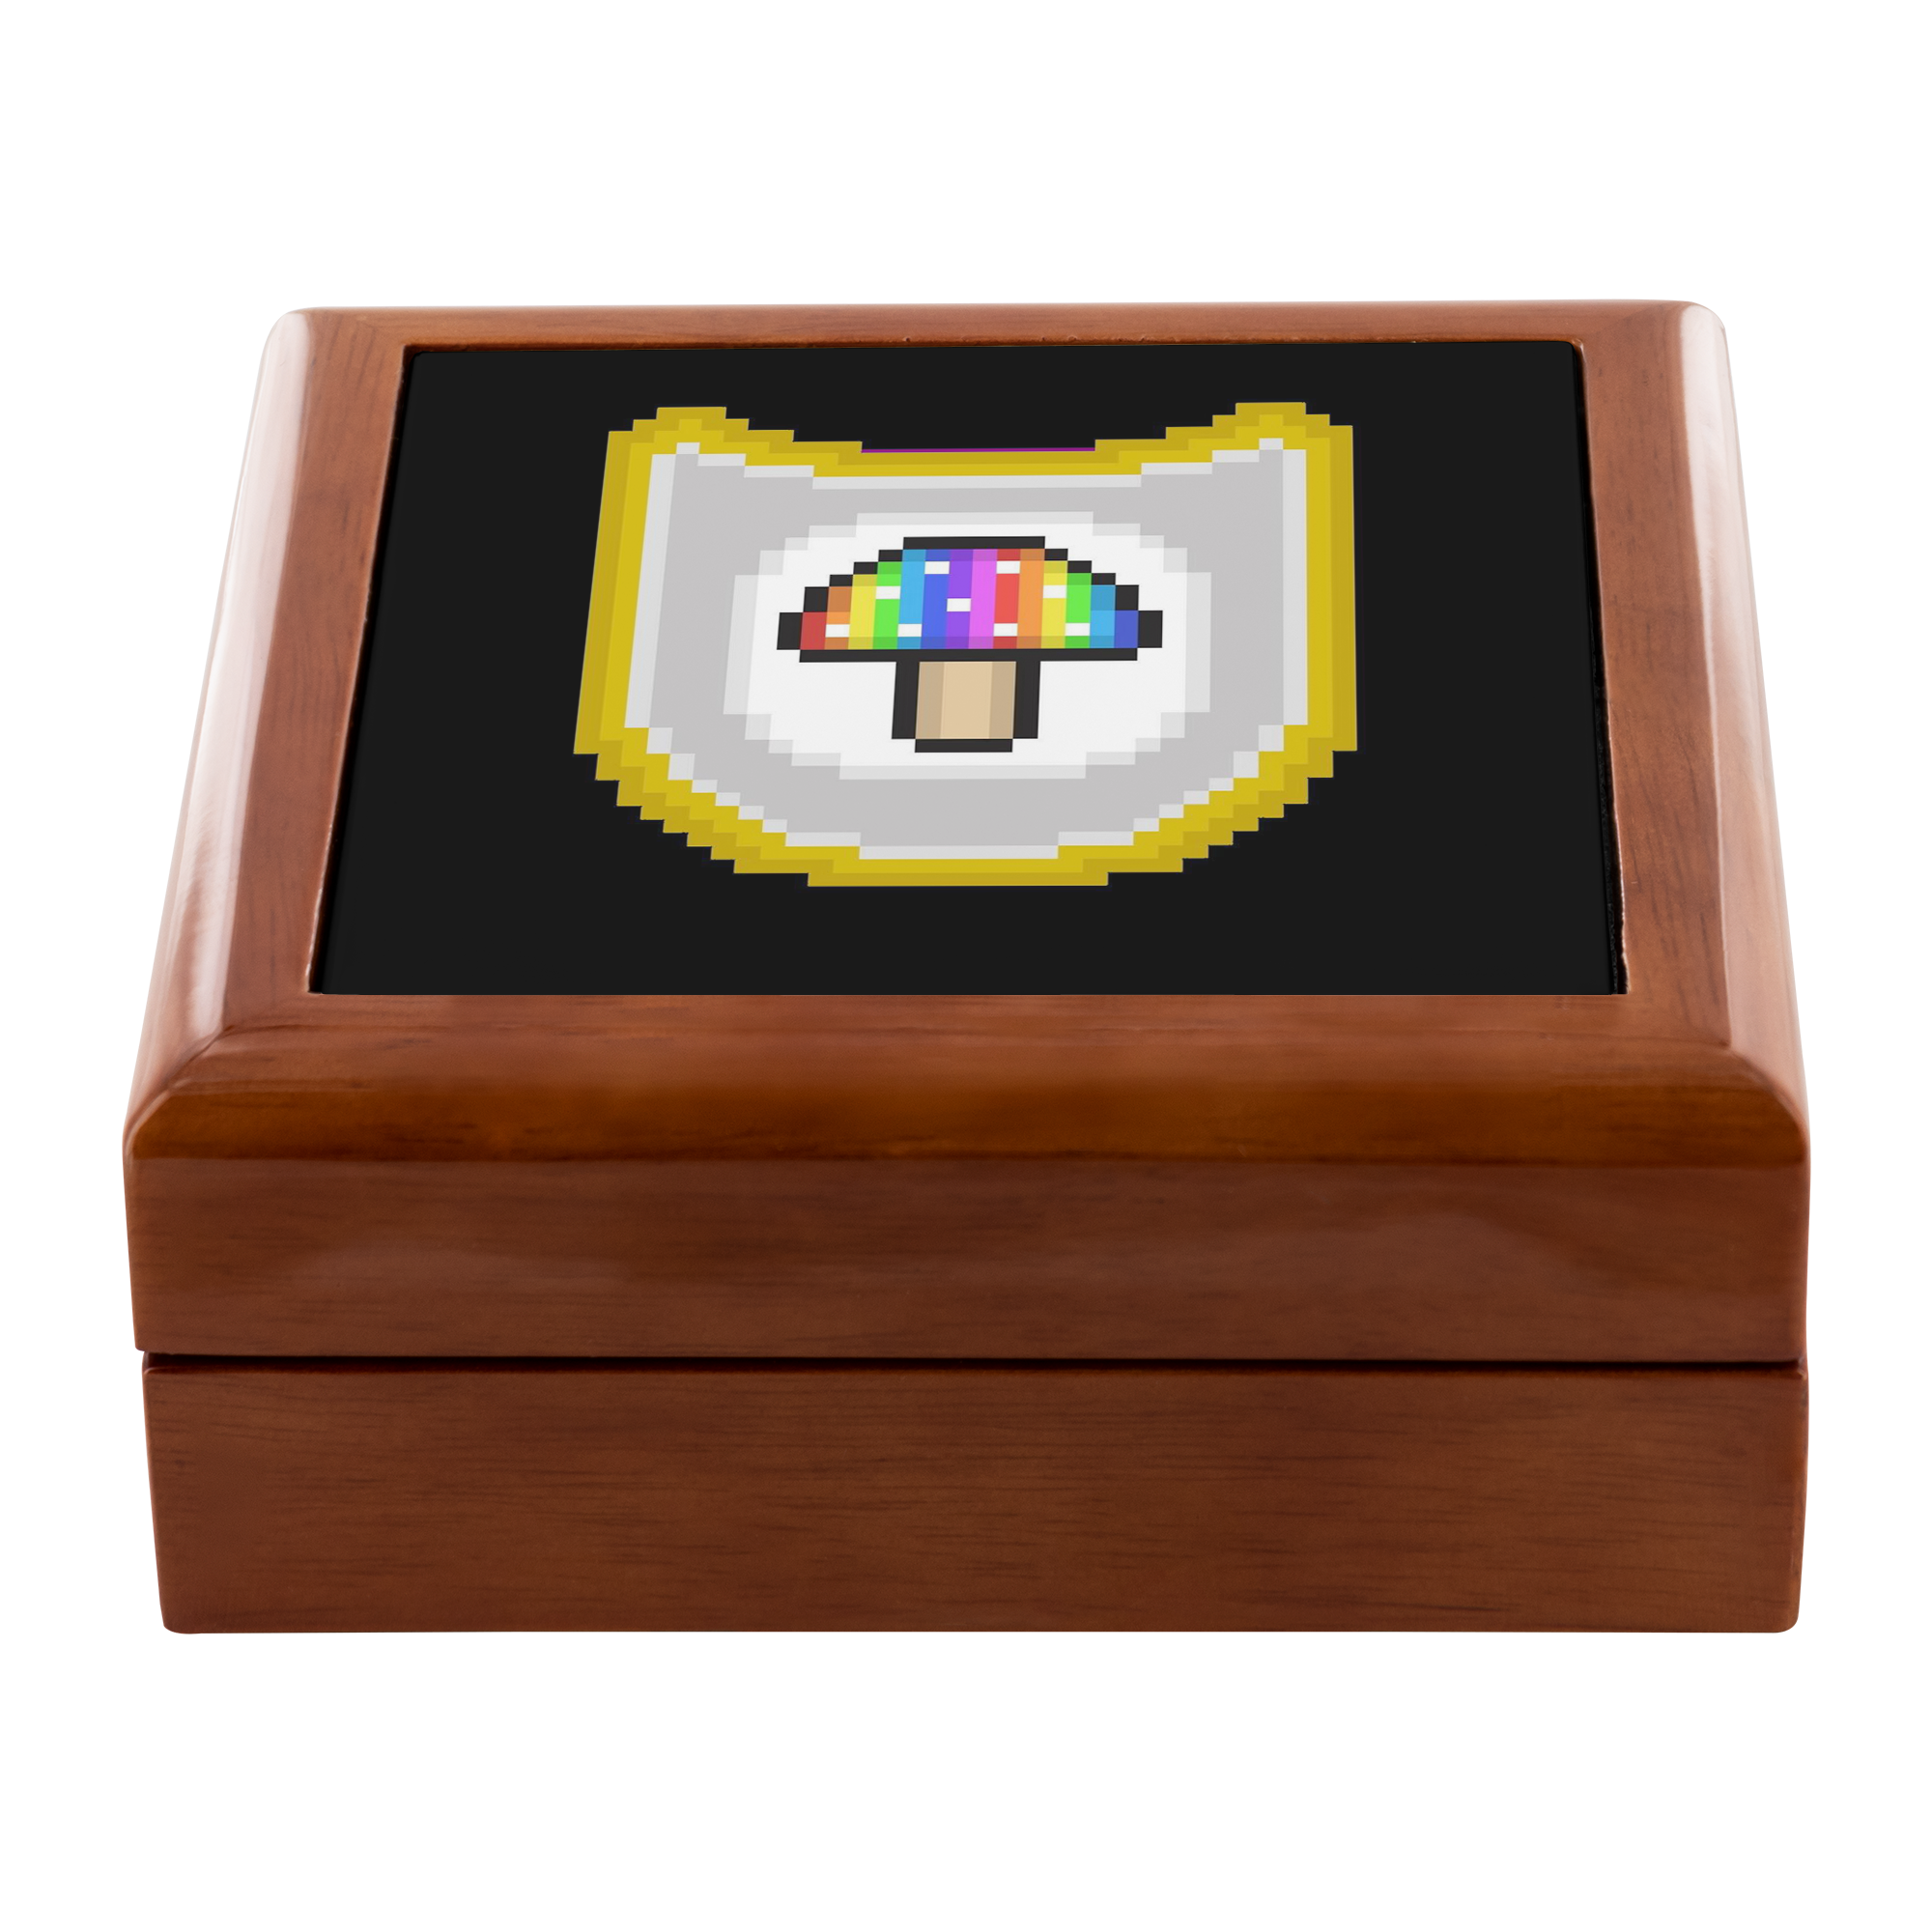 btnft Crafted Wood Jewel Box